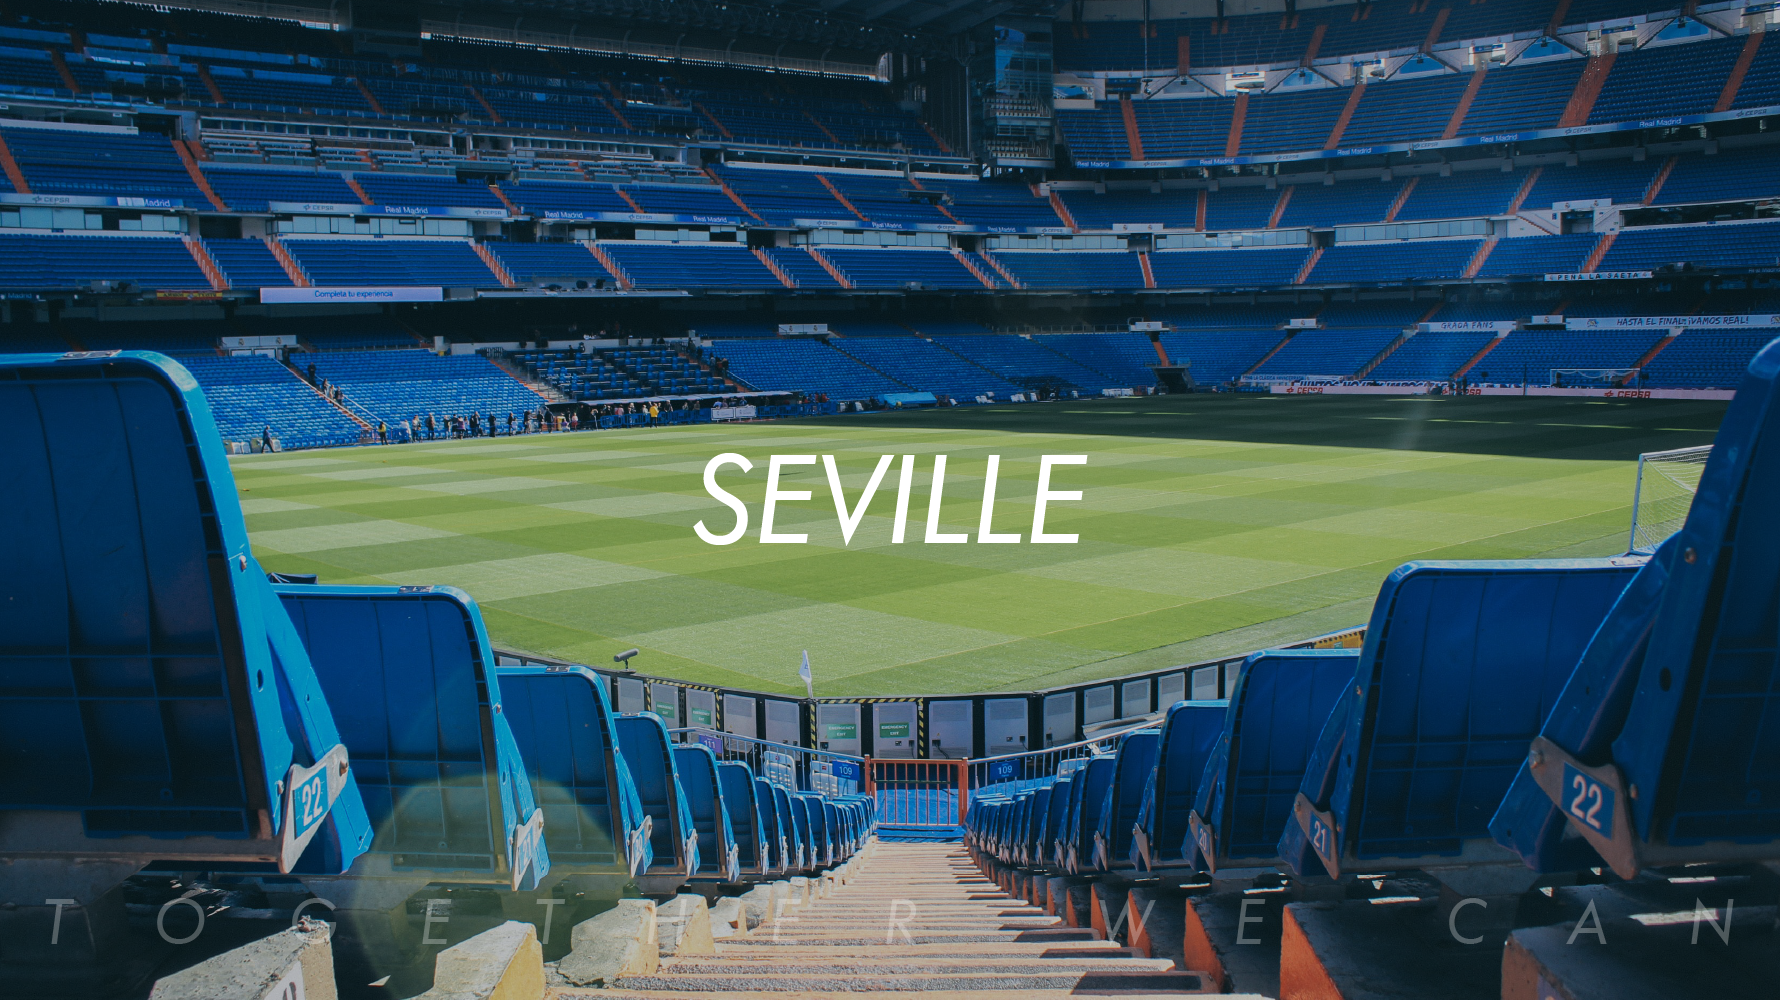 The Seville design